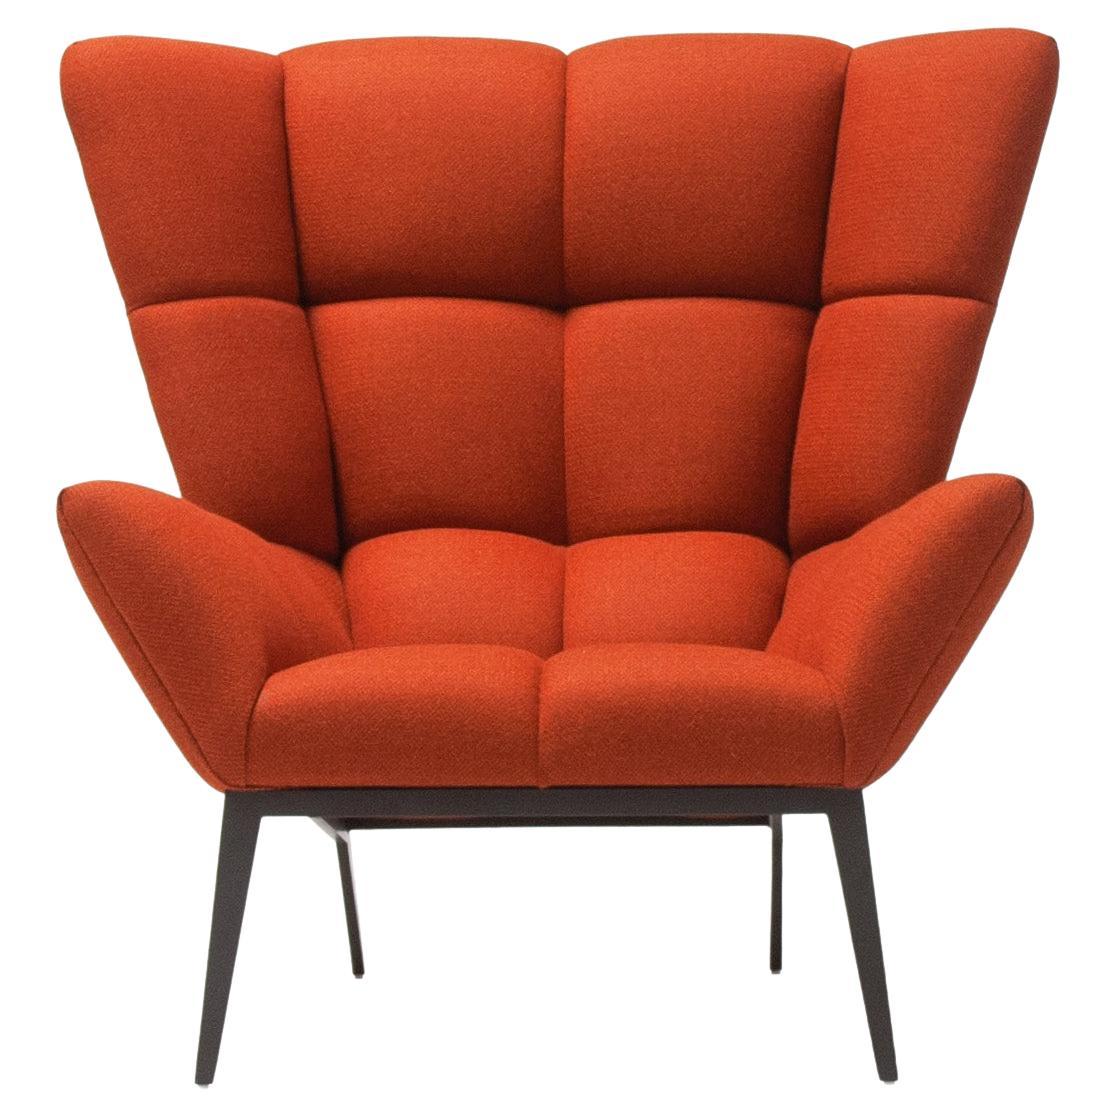 Vioski New Century Modern Tufted Tuulla Lounge Chair in Persimmon Orange For Sale